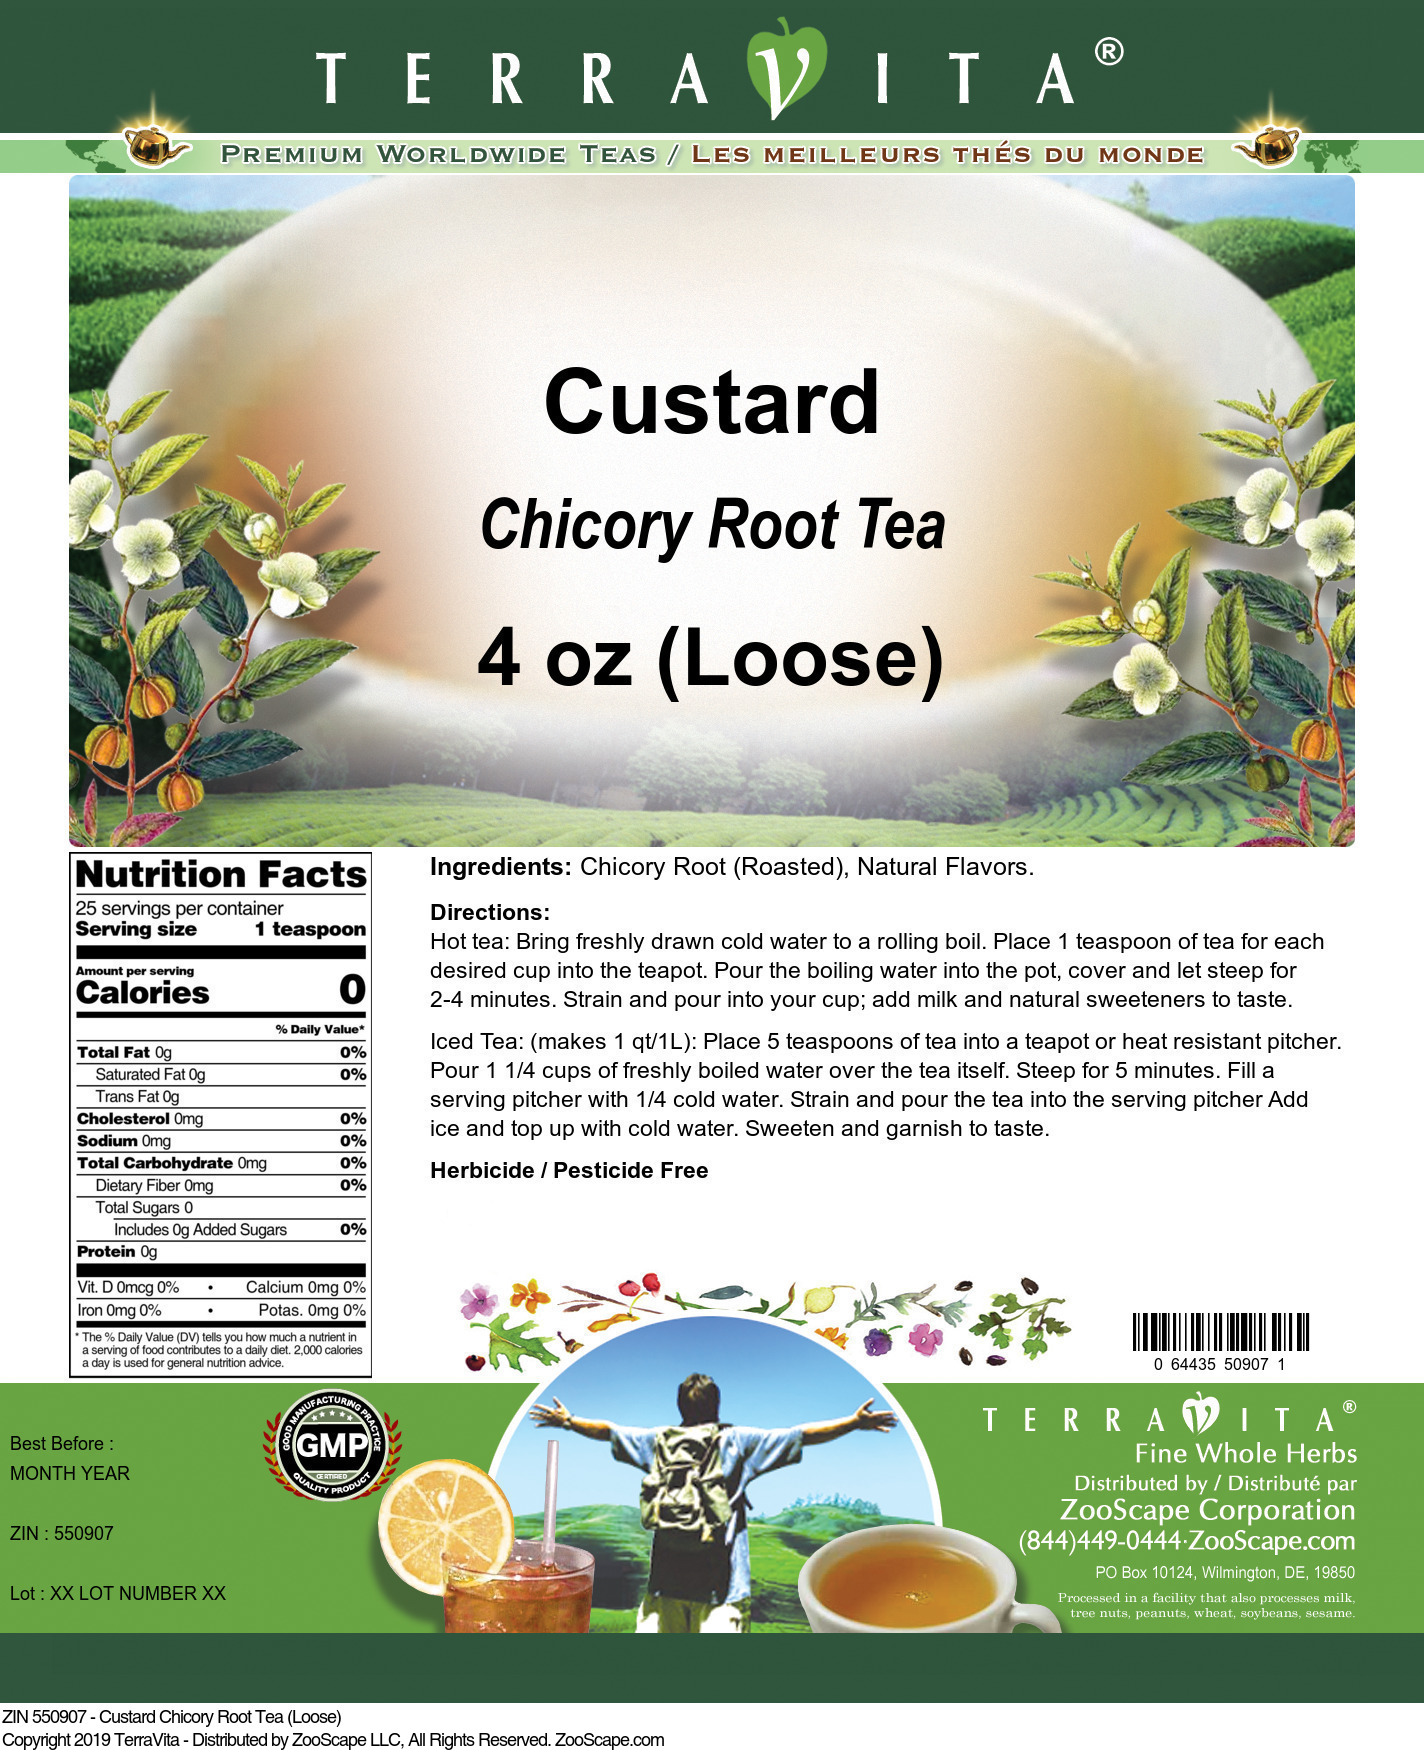 Custard Chicory Root Tea (Loose) - Label